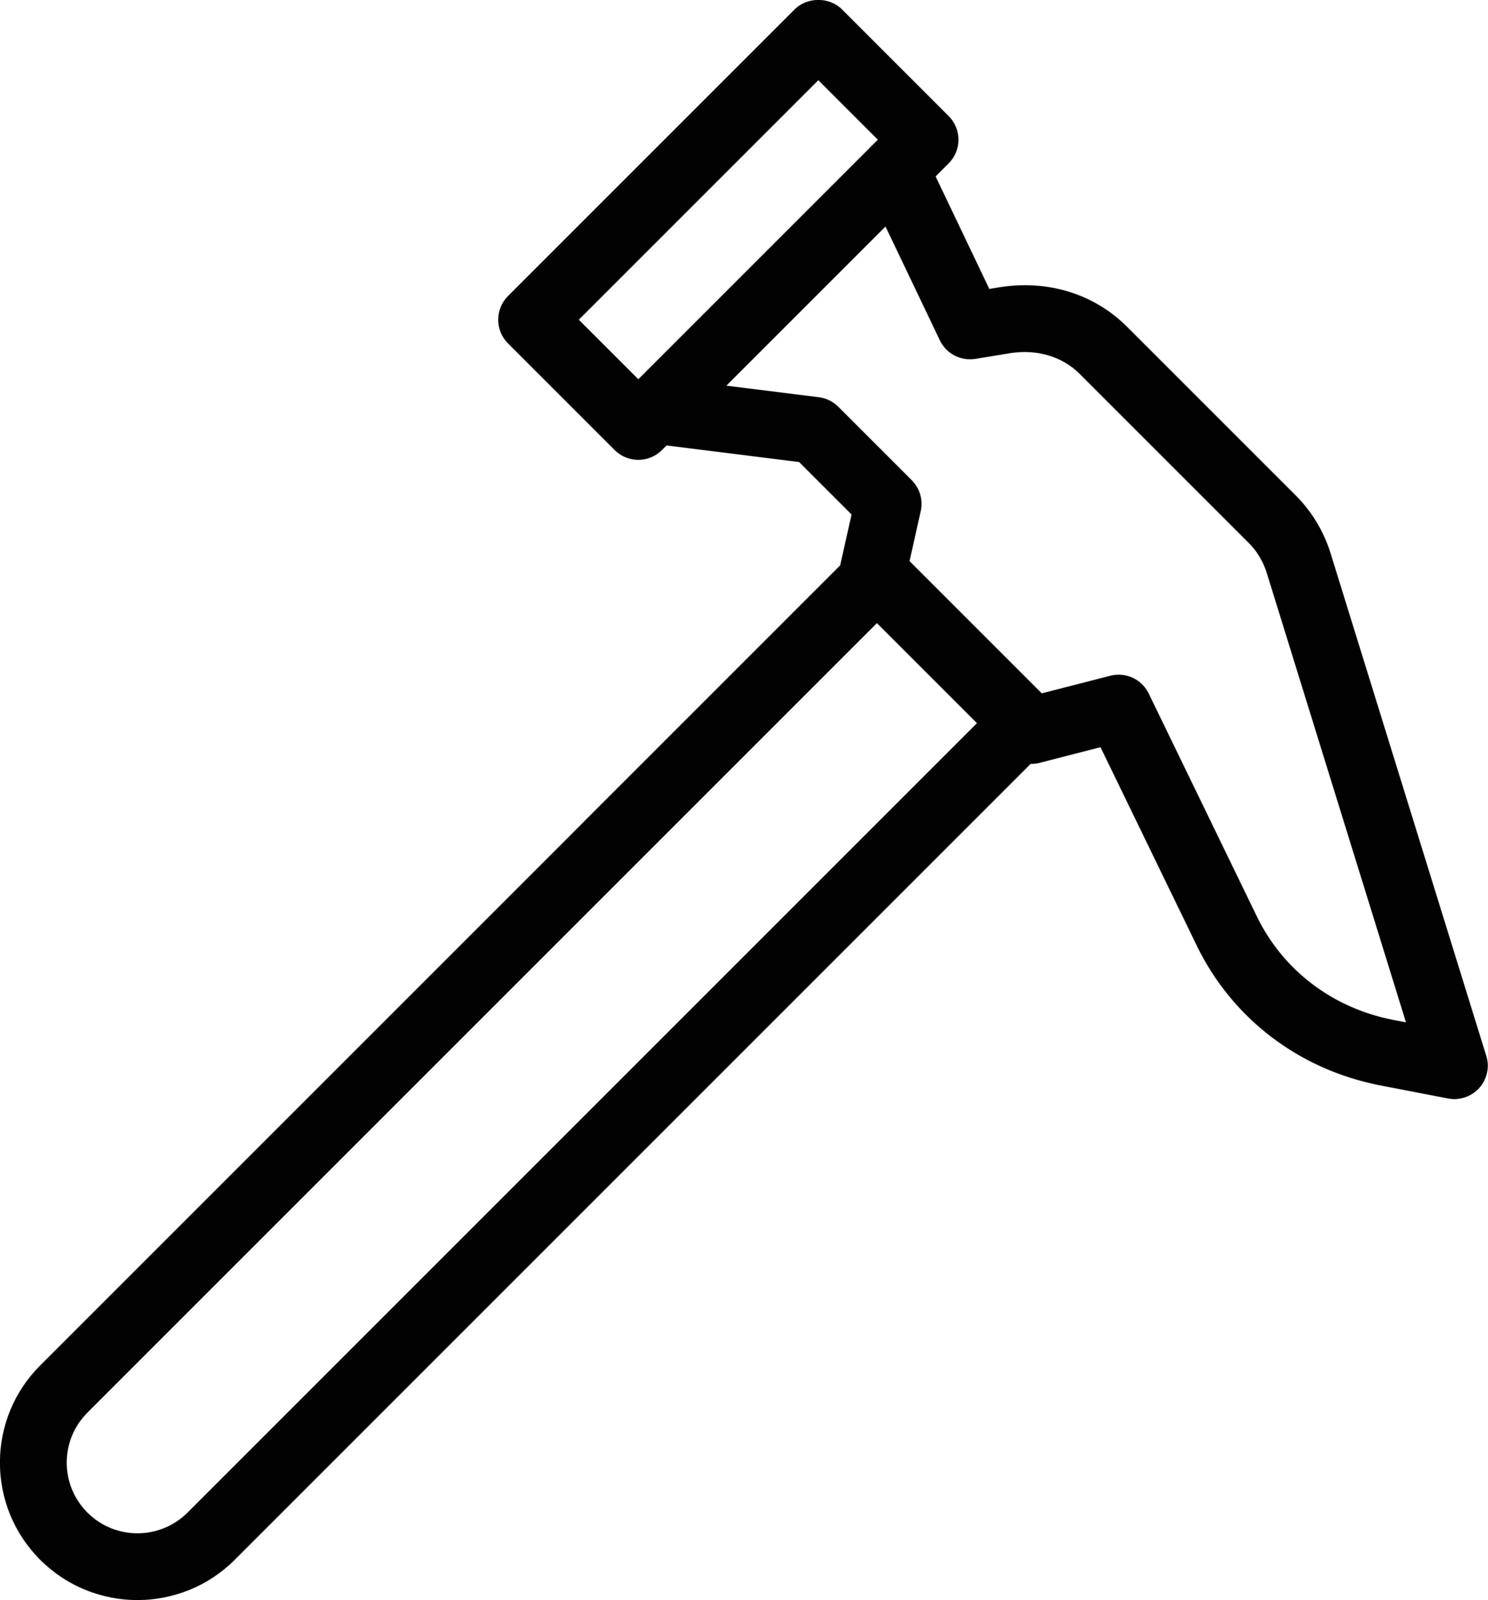 hammer by FlaticonsDesign